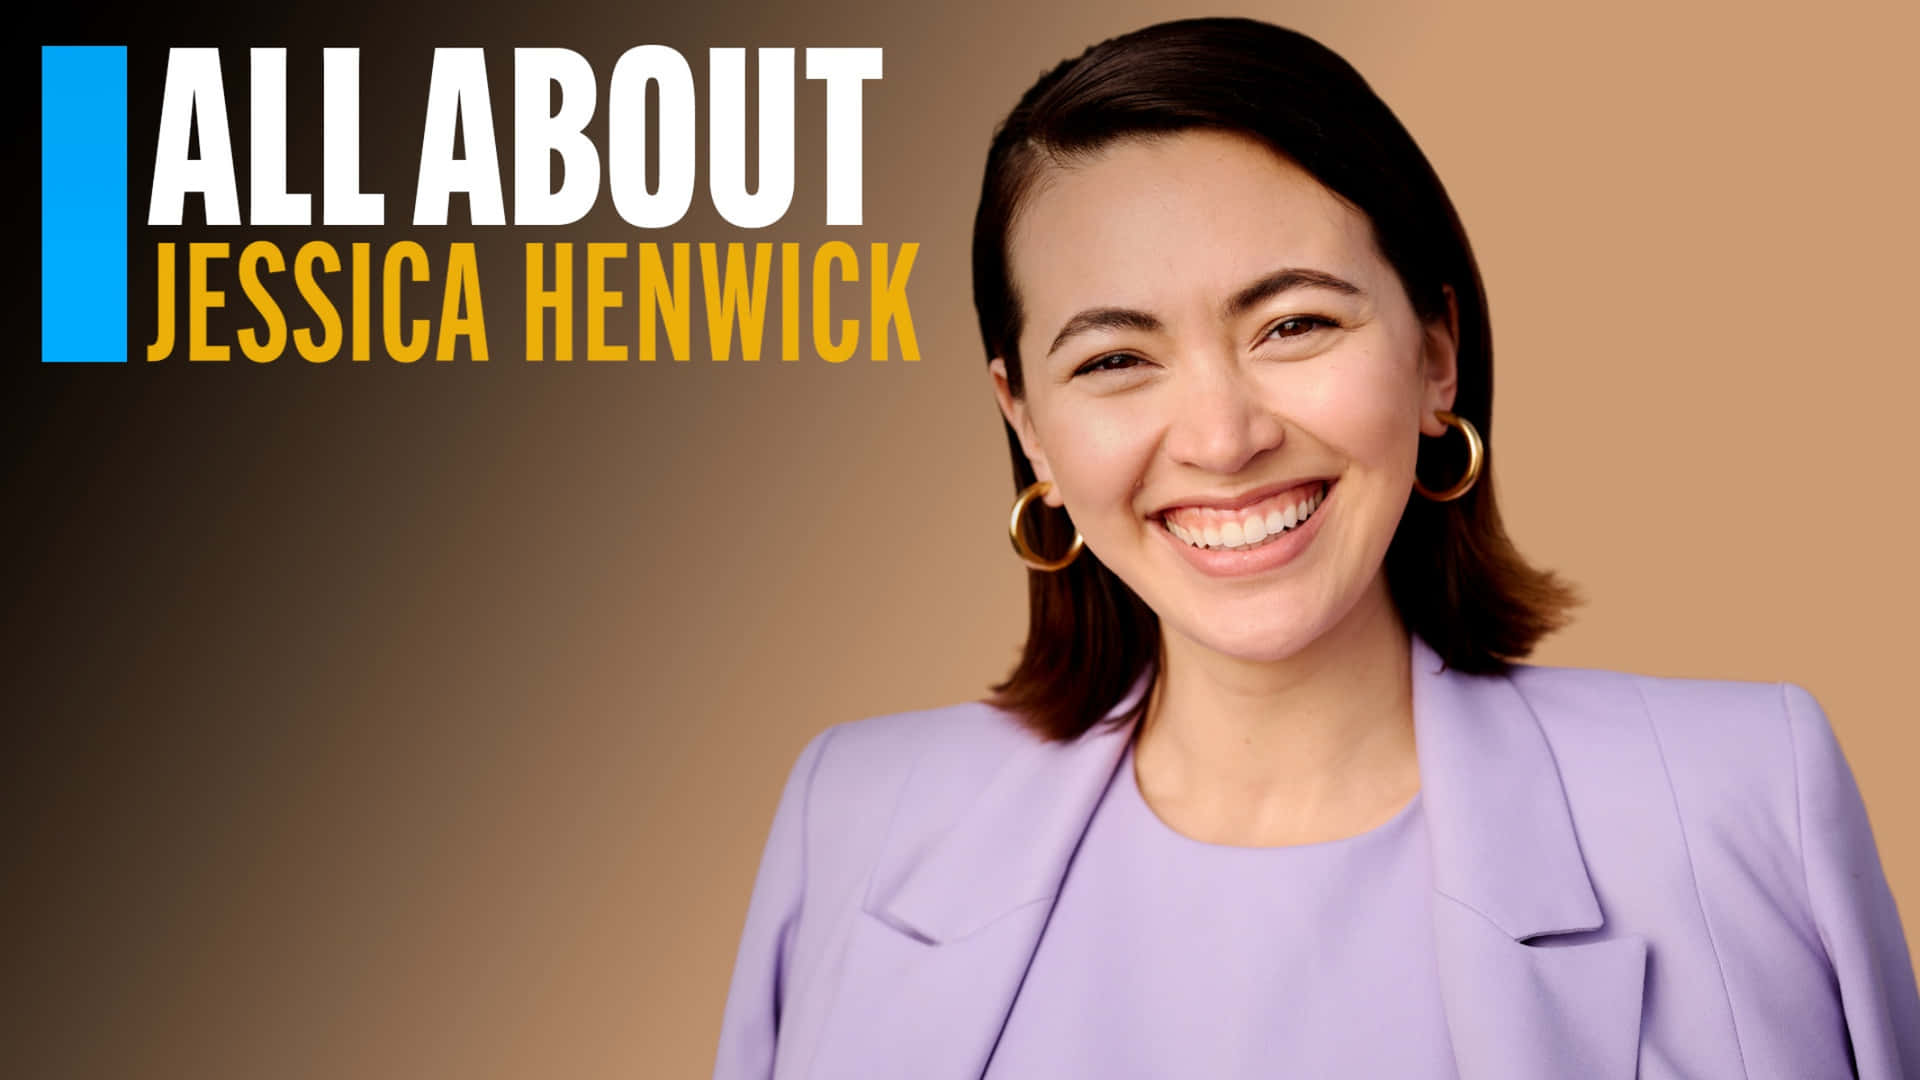 Jessica Henwick Smiling Portrait Wallpaper